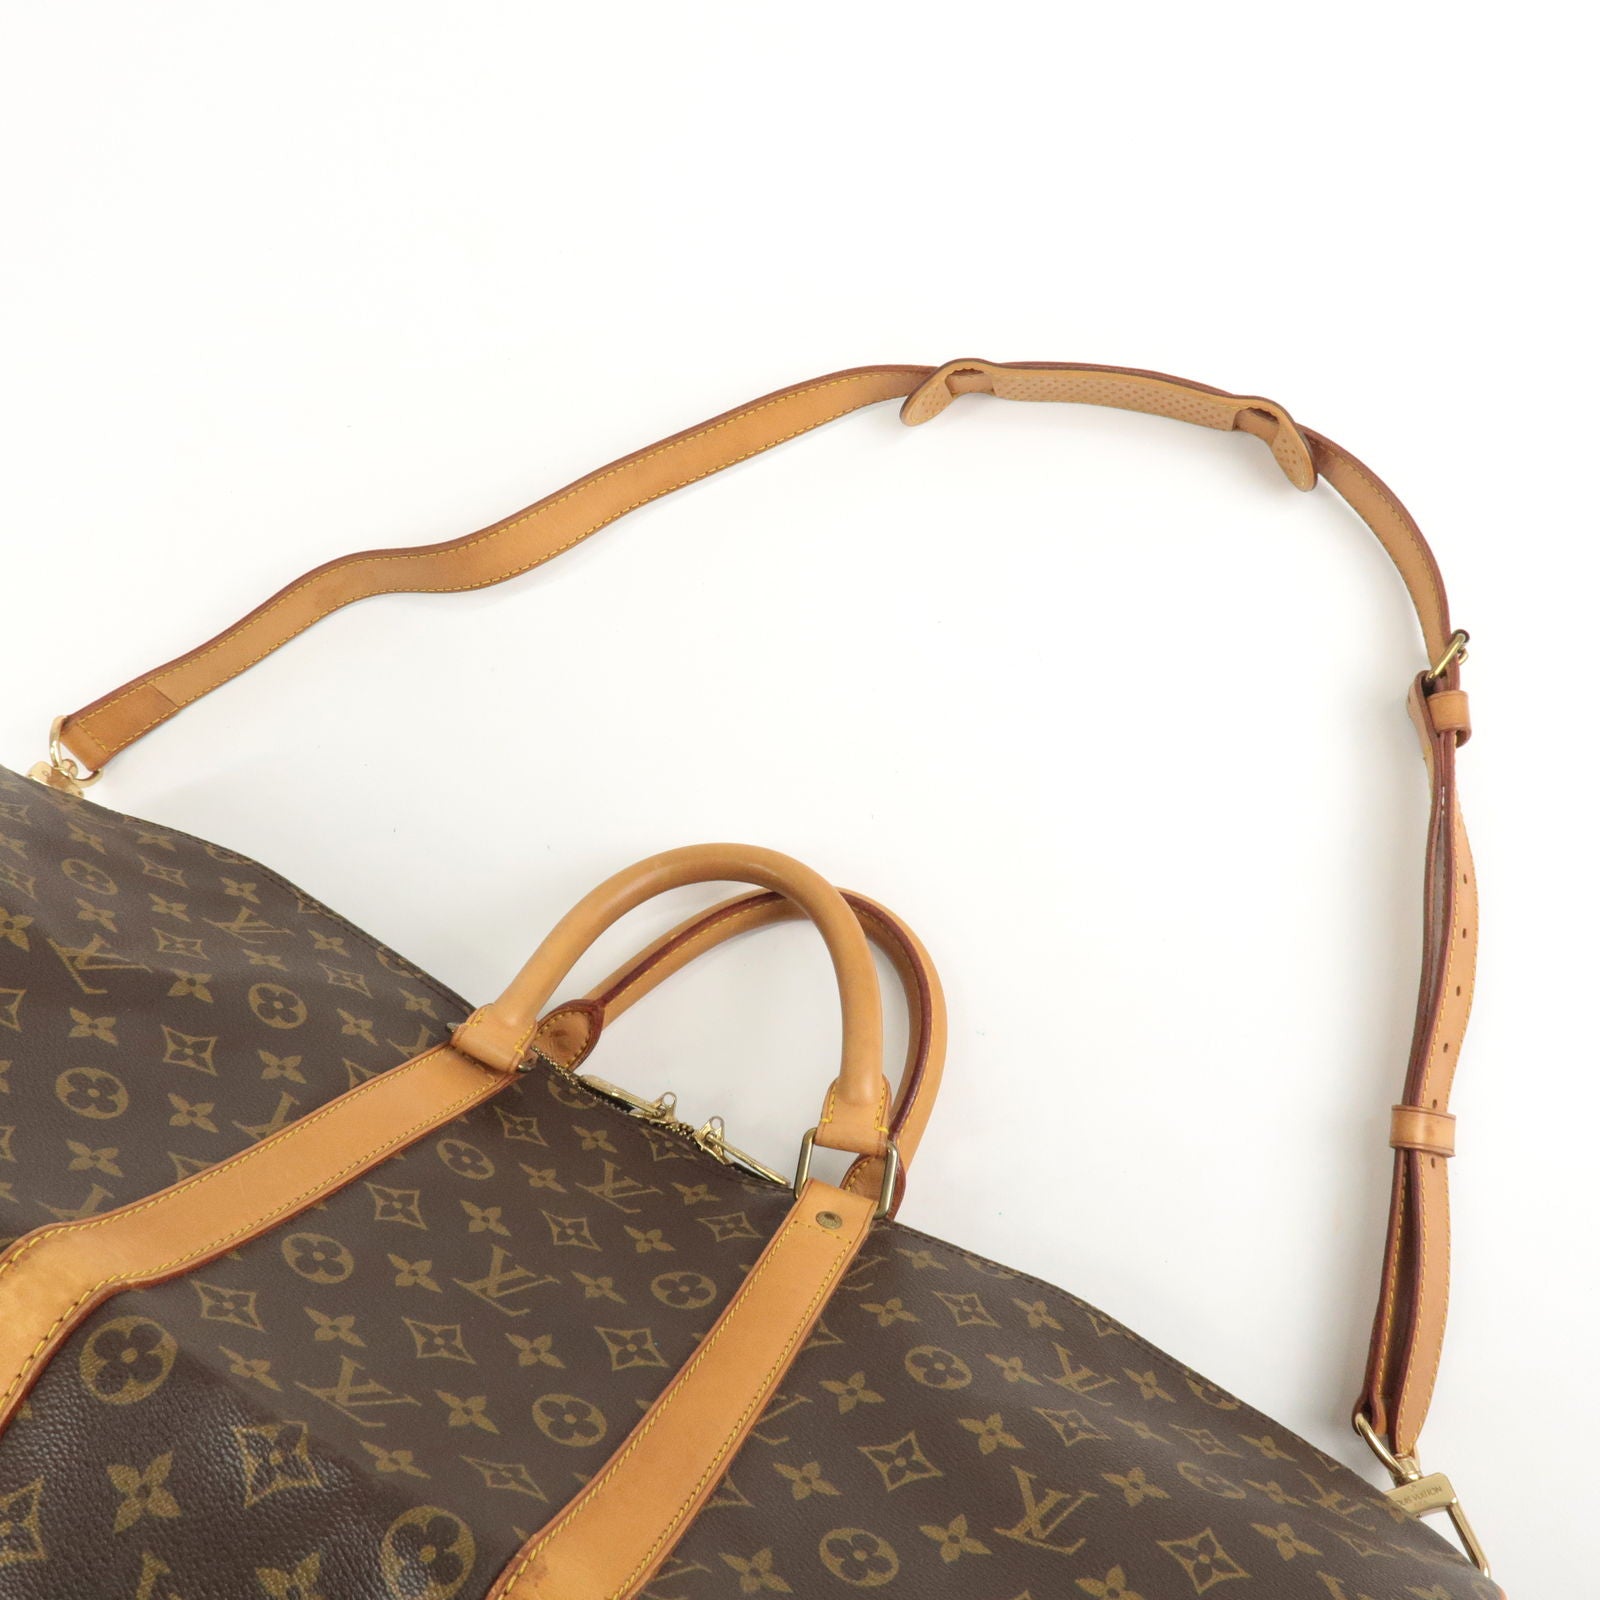 sacoche louis vuitton outdoor - ep_vintage luxury Store - All - M41414 –  dct - Bandouliere - Bag - Monogram - Vuitton - 55 - Louis - Keep